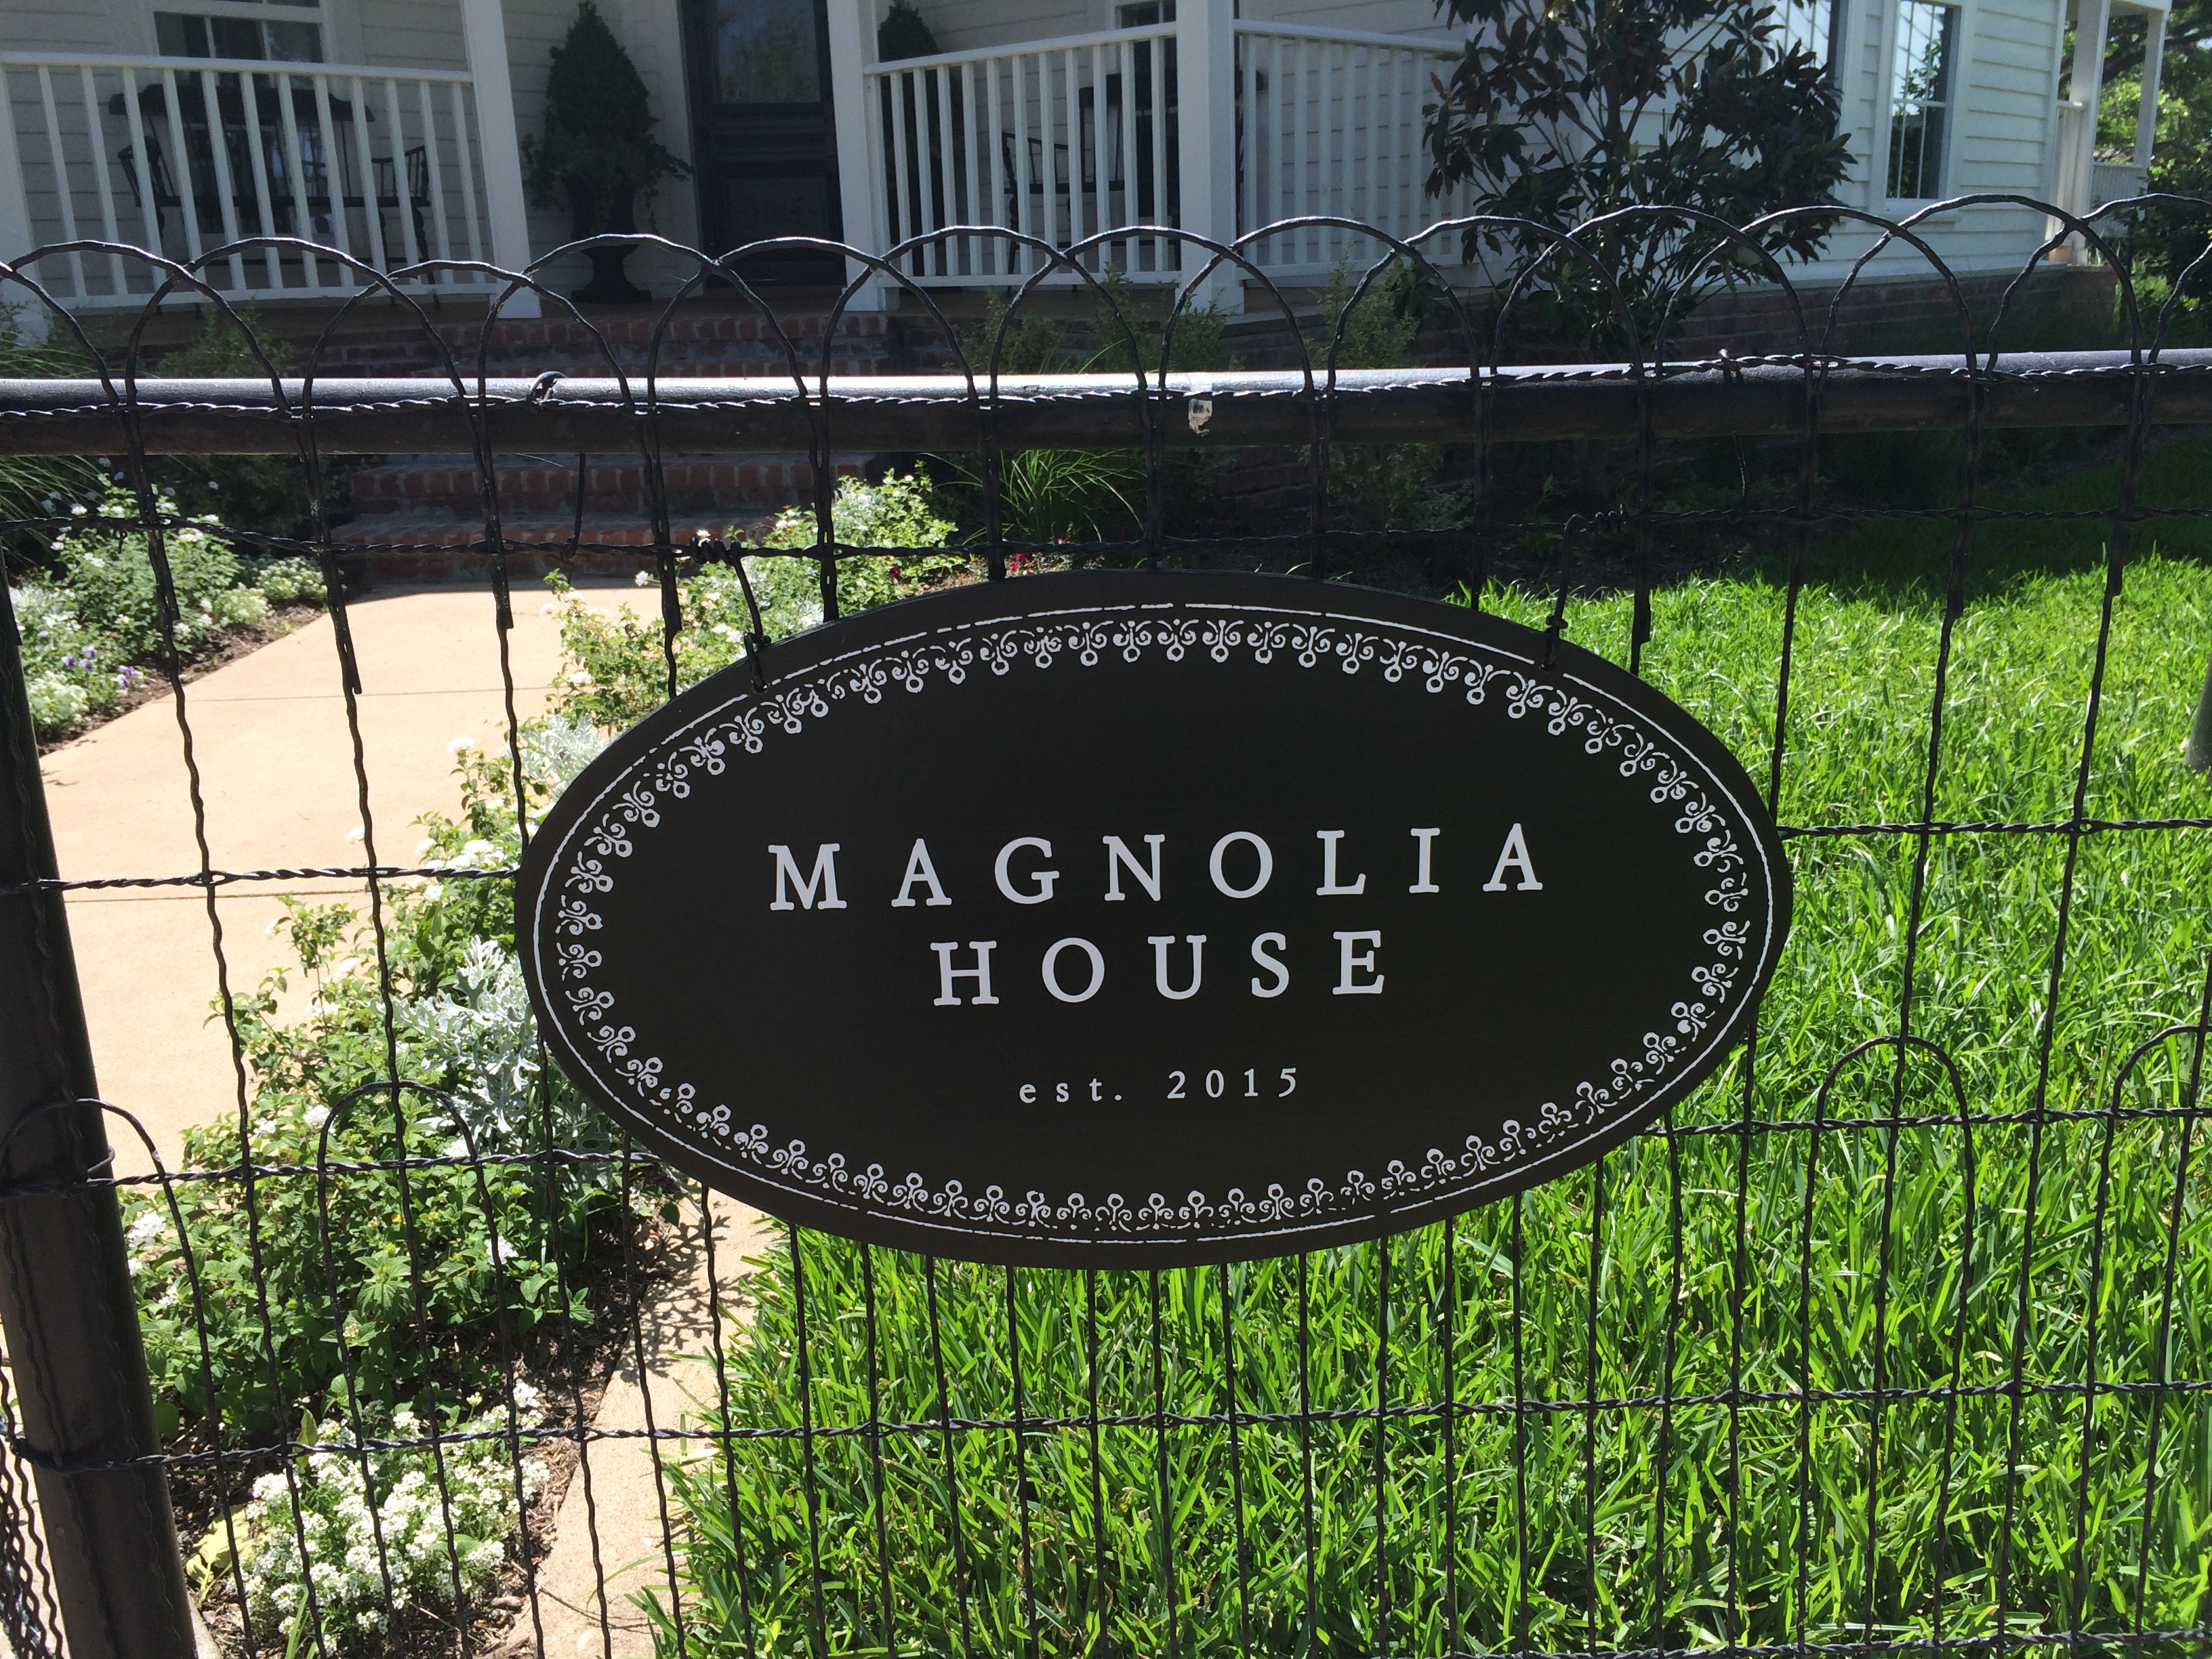 Magnolia House Bed and Breakfast McGregor TX near Waco TX ...